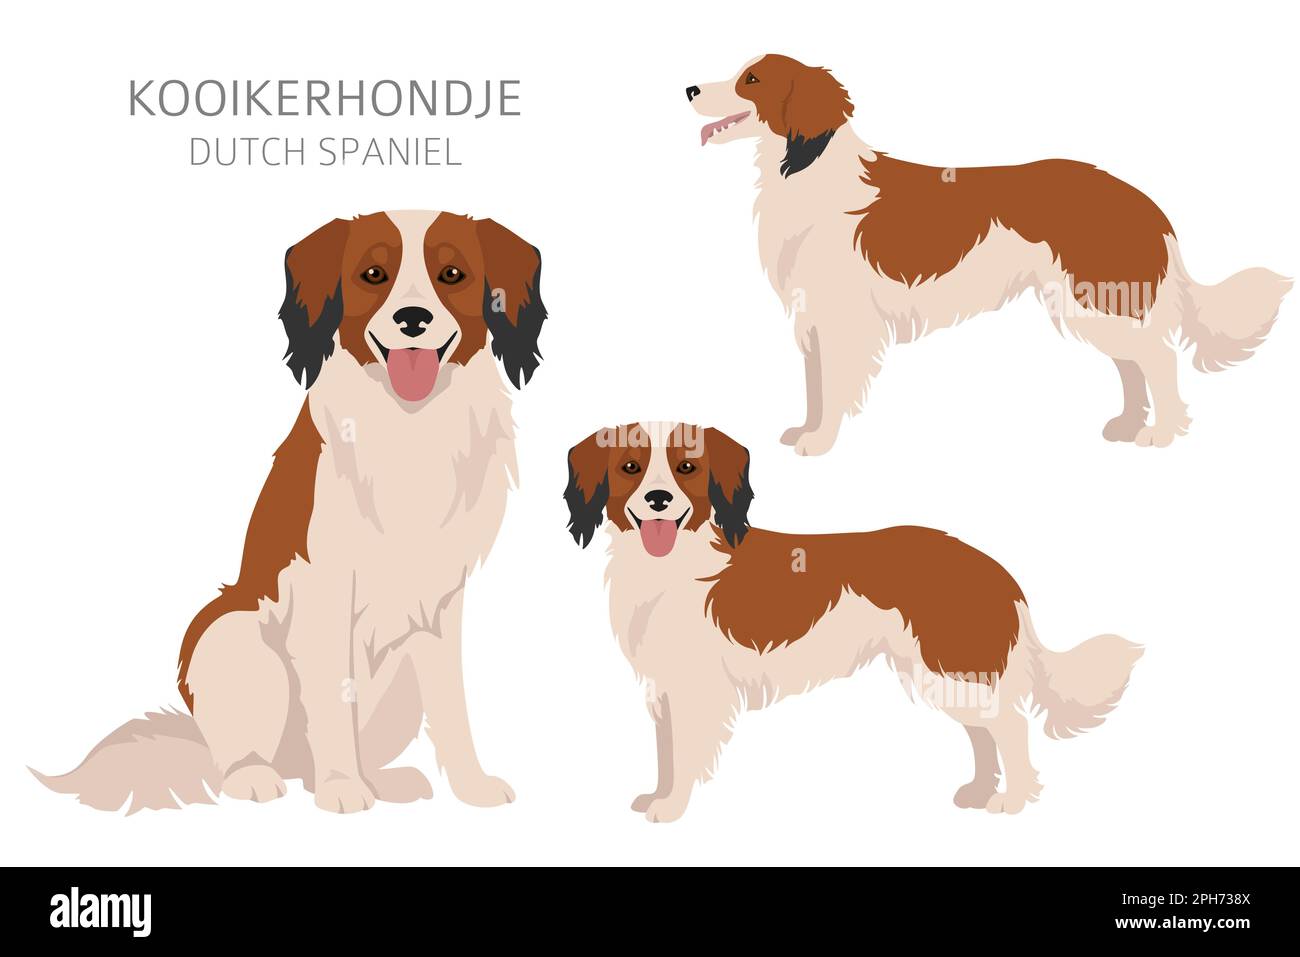 Kooikerhondje clipart. Different poses, coat colors set.  Vector illustration Stock Vector